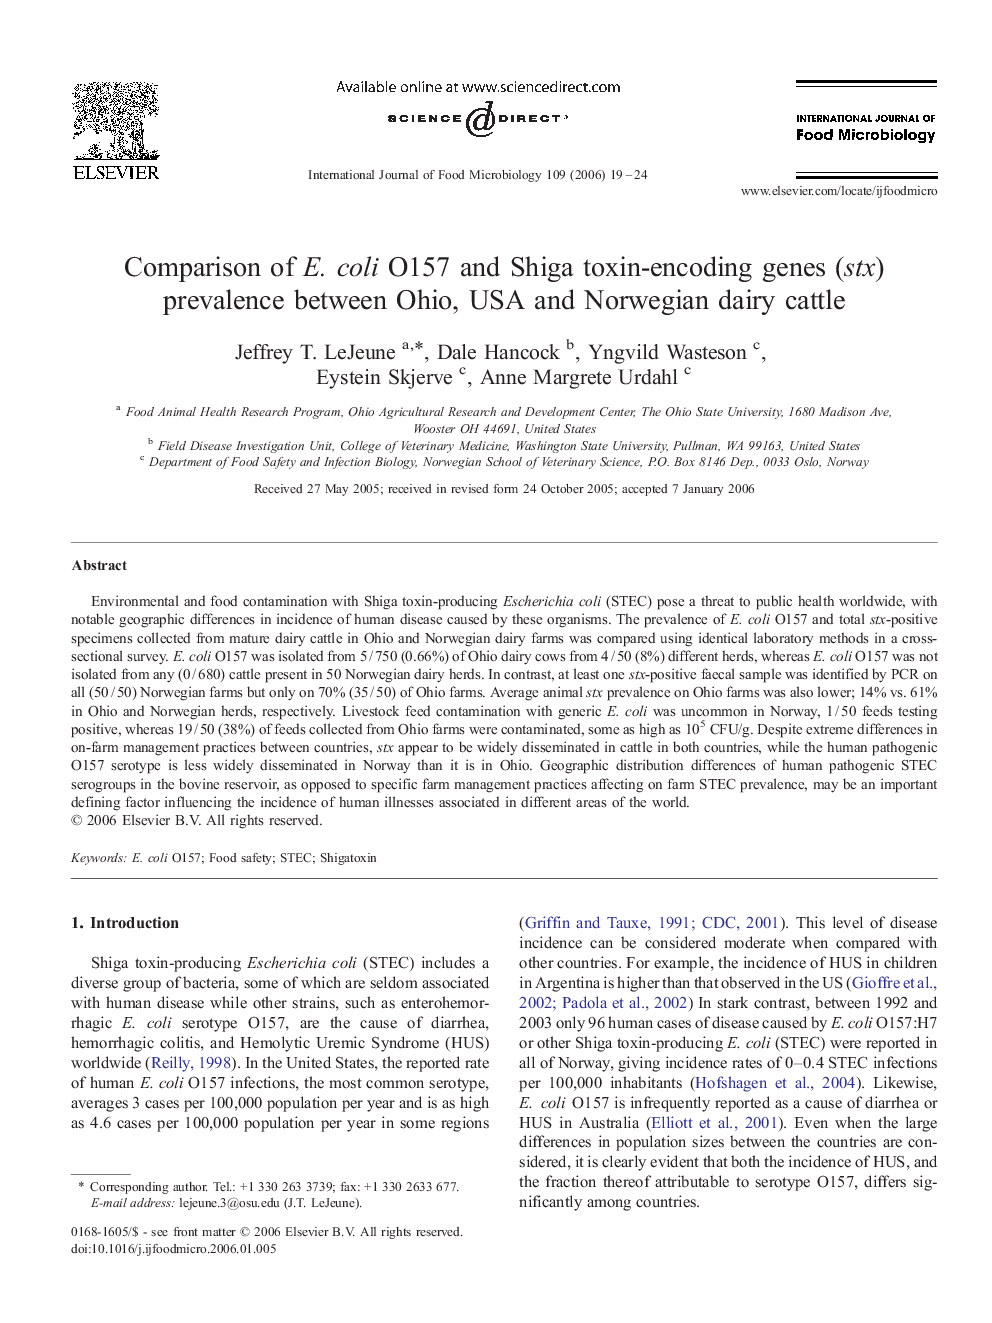 Comparison of E. coli O157 and Shiga toxin-encoding genes (stx) prevalence between Ohio, USA and Norwegian dairy cattle